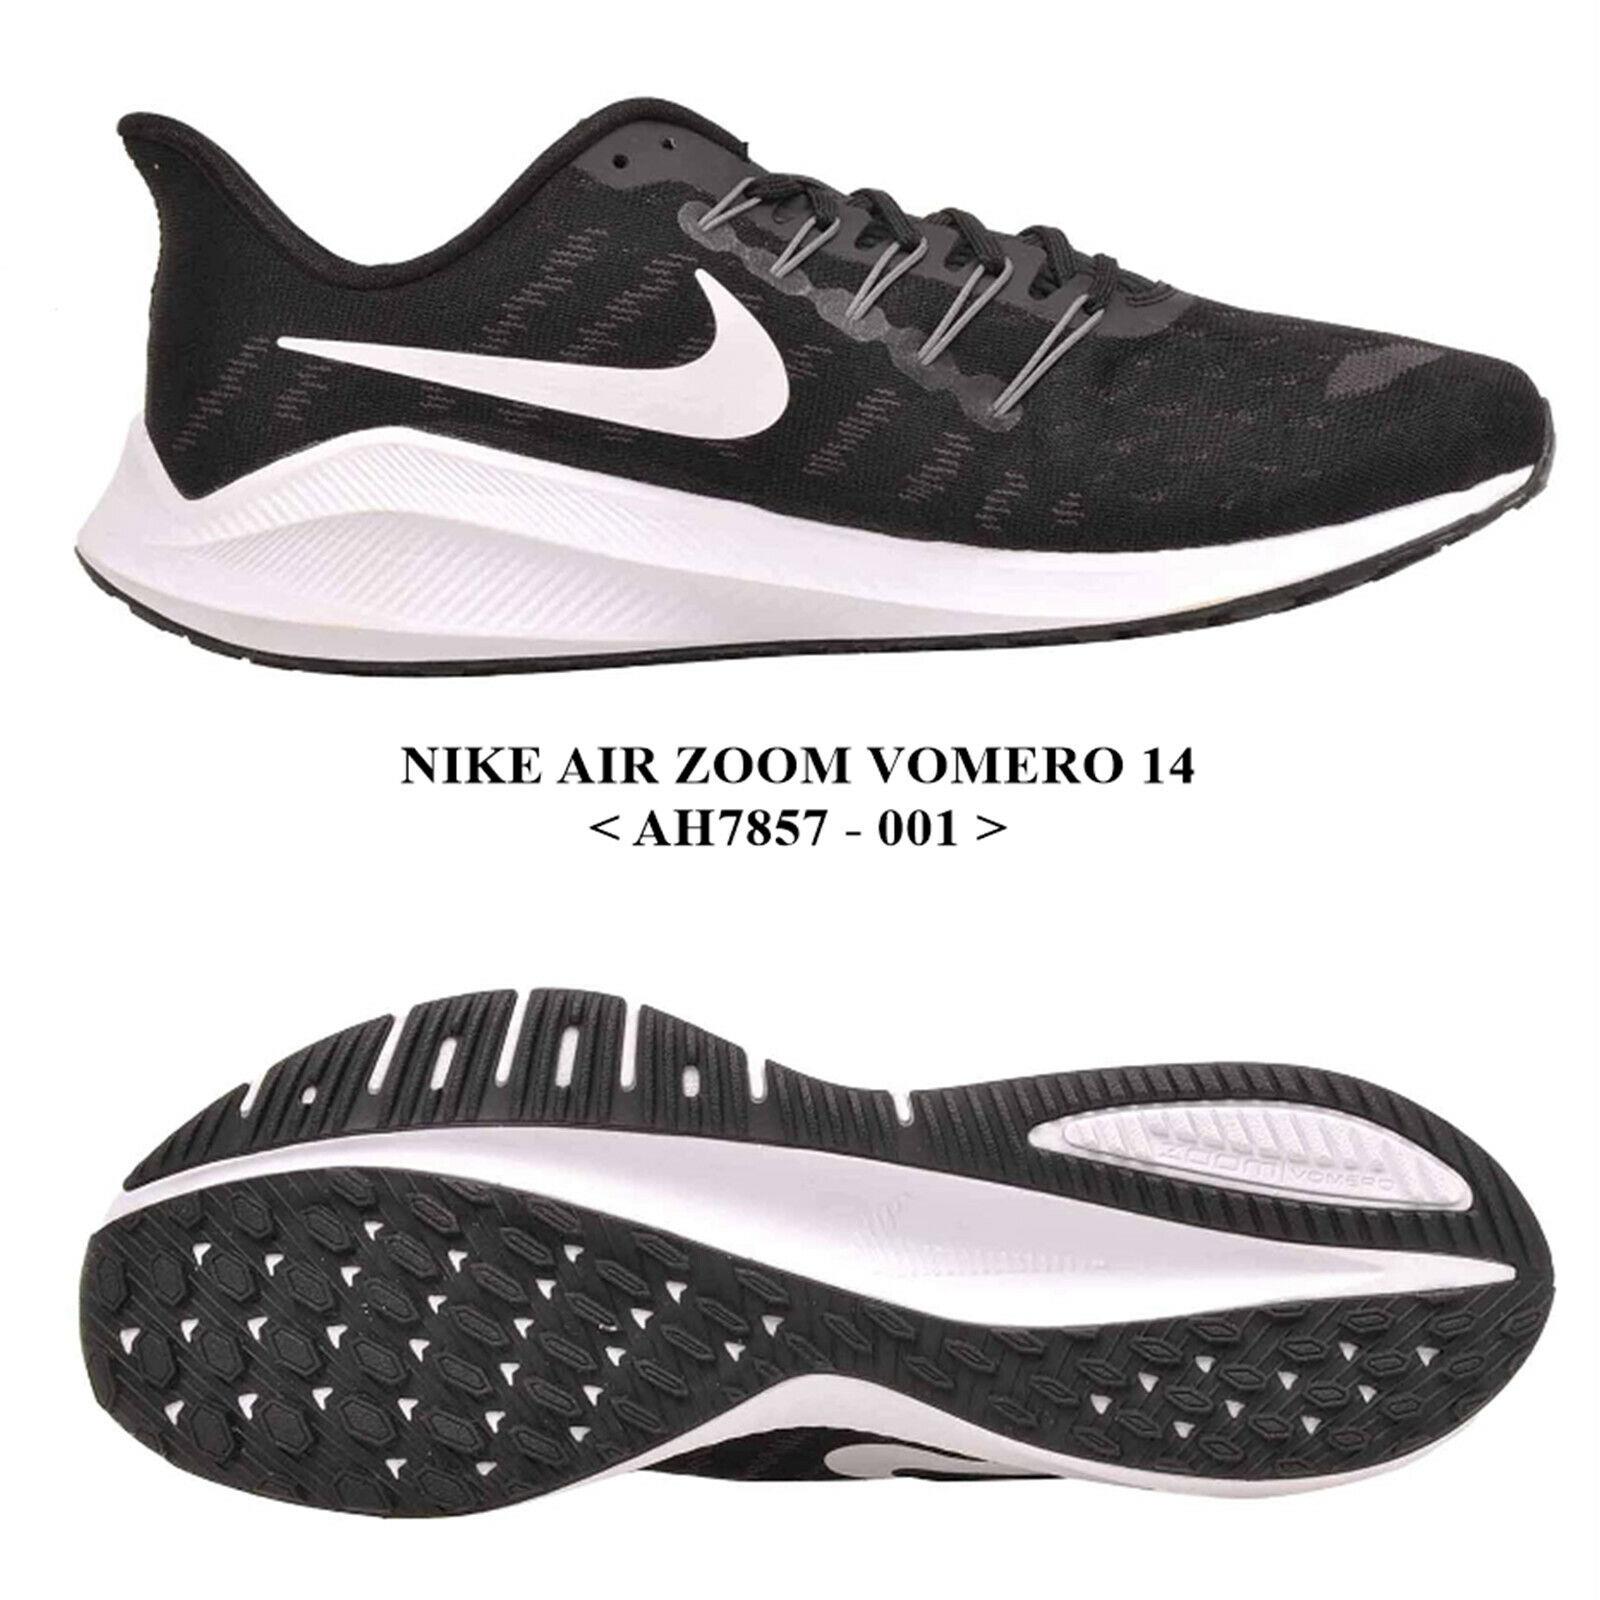 Nike Air Zoom Vomero 14 <AH7857 - 001> Men`s Running Shoes with Box - BLACK/WHITE-THUNDER GREY , BLACK/WHITE-THUNDER GREY Manufacturer